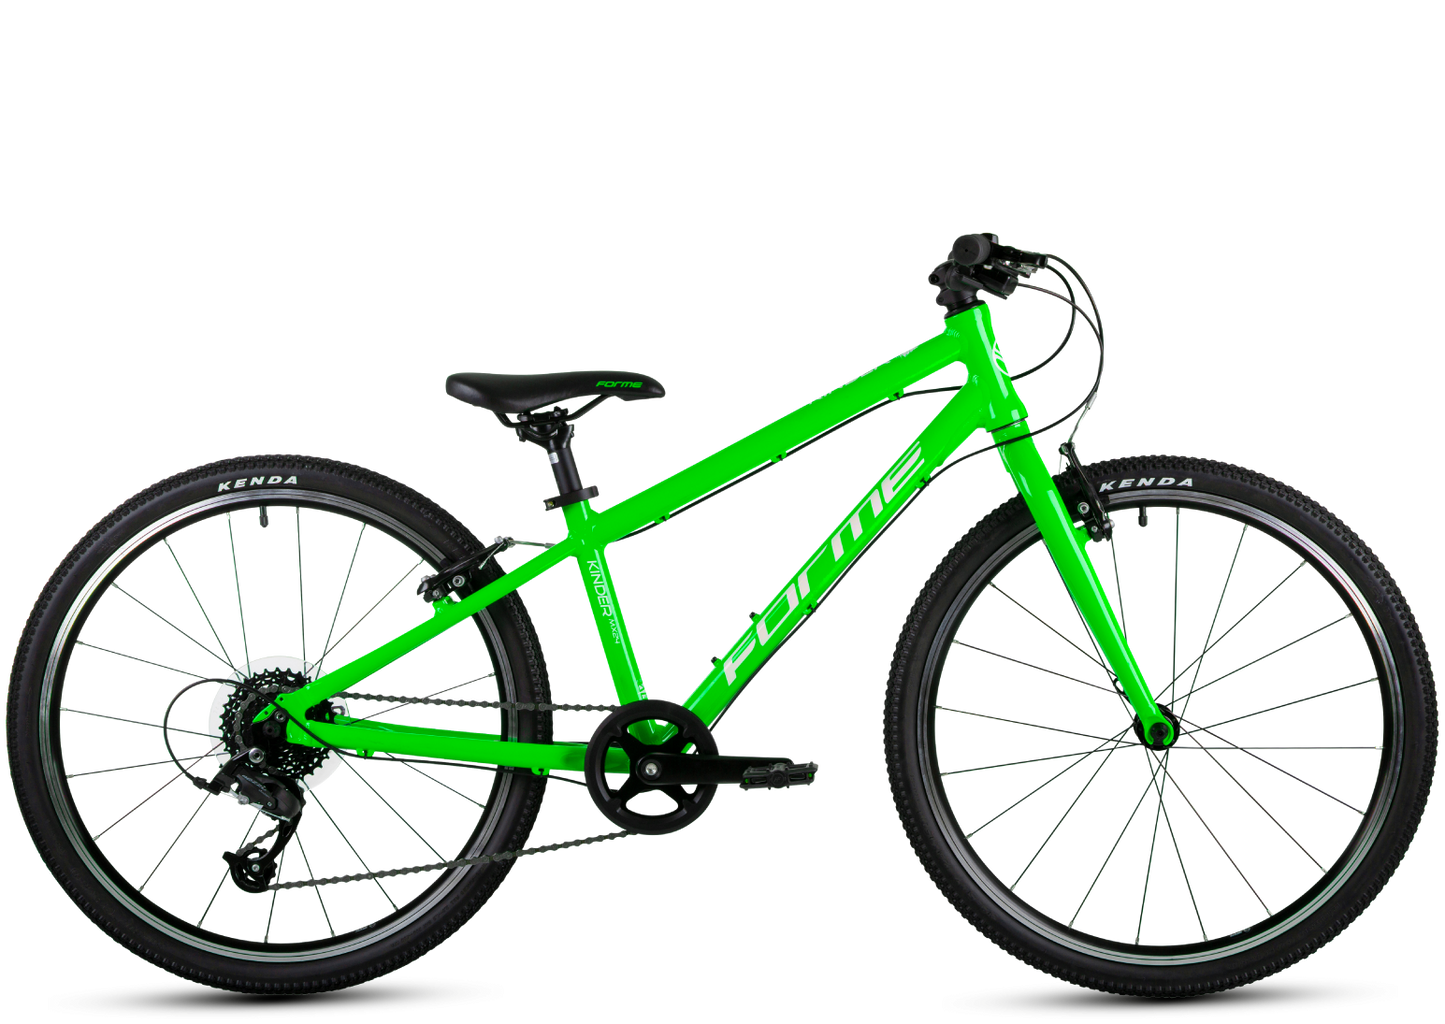 Forme Kinder MX ATB 24” Junior Hybrid Bike | Forme Bikes